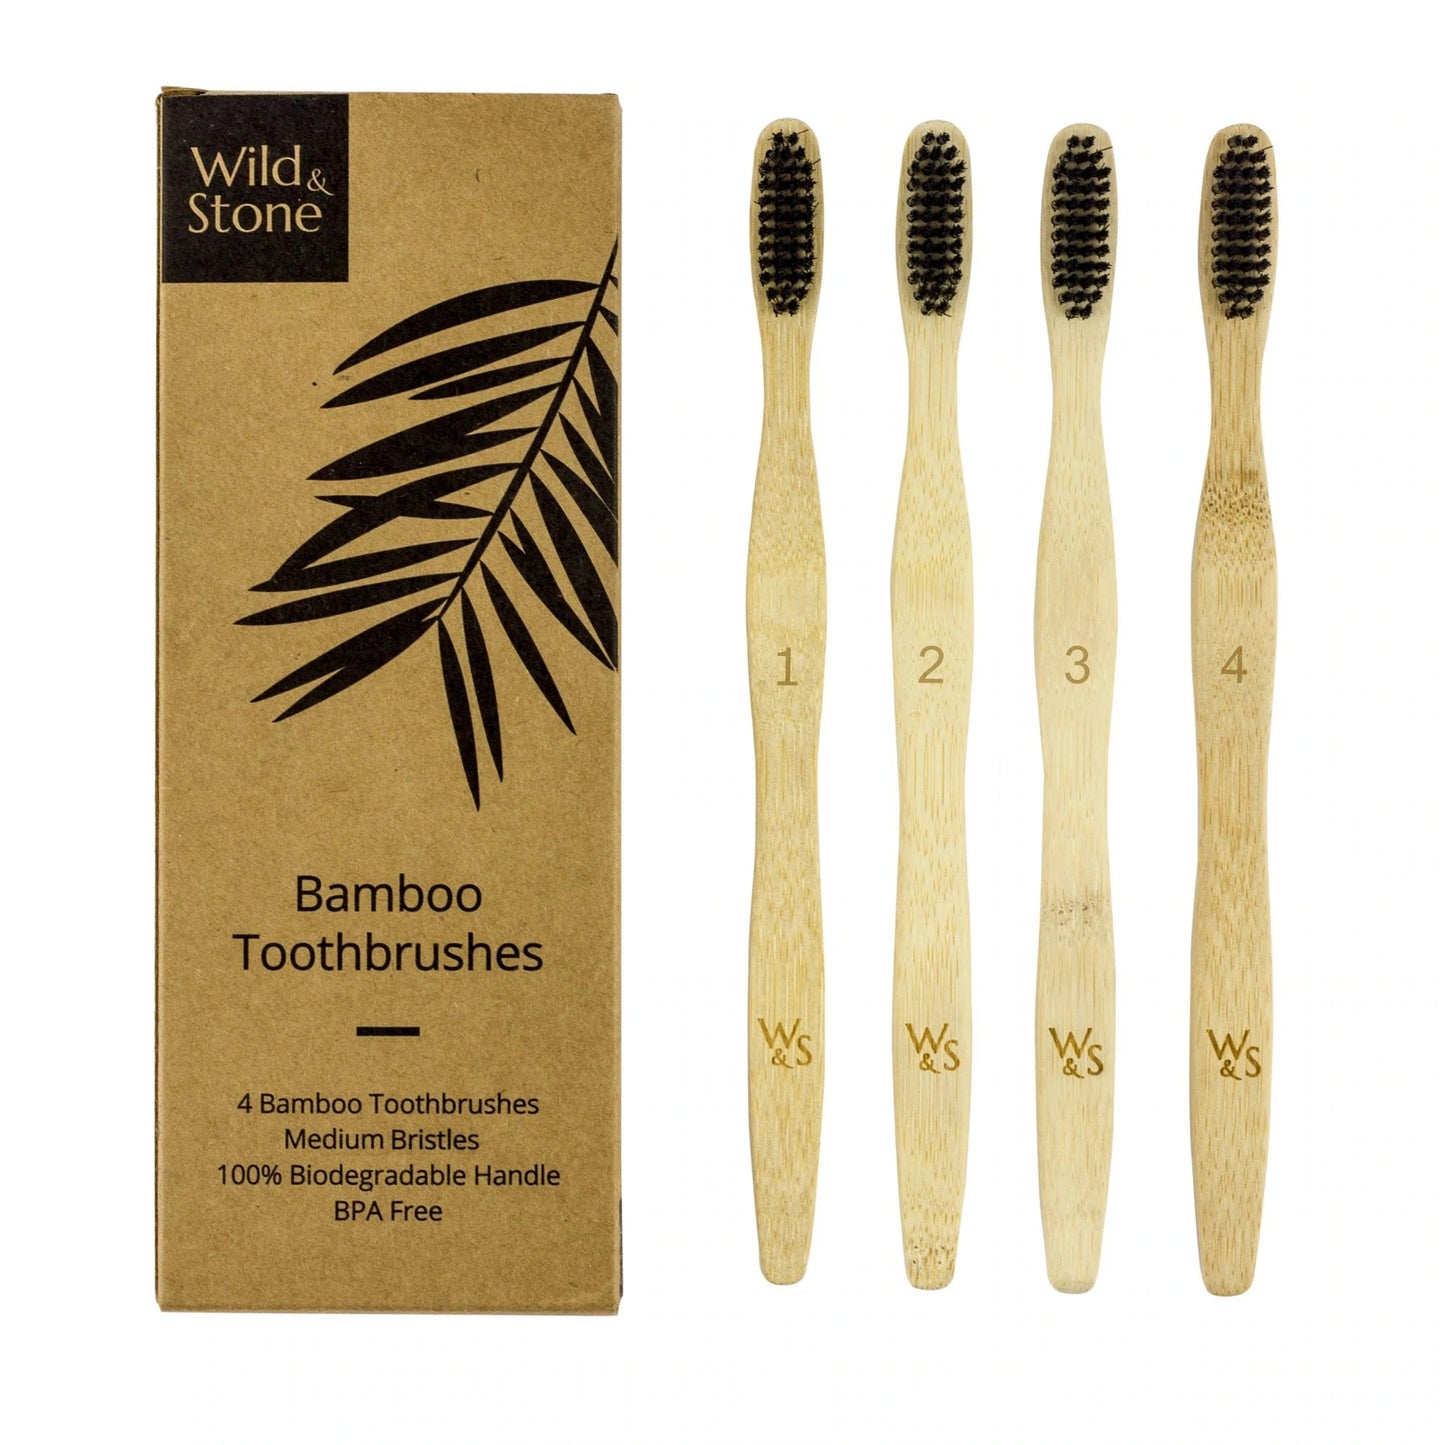 Wild & Stone Adult Bamboo Toothbrush - Medium Bristles - 4 Pack